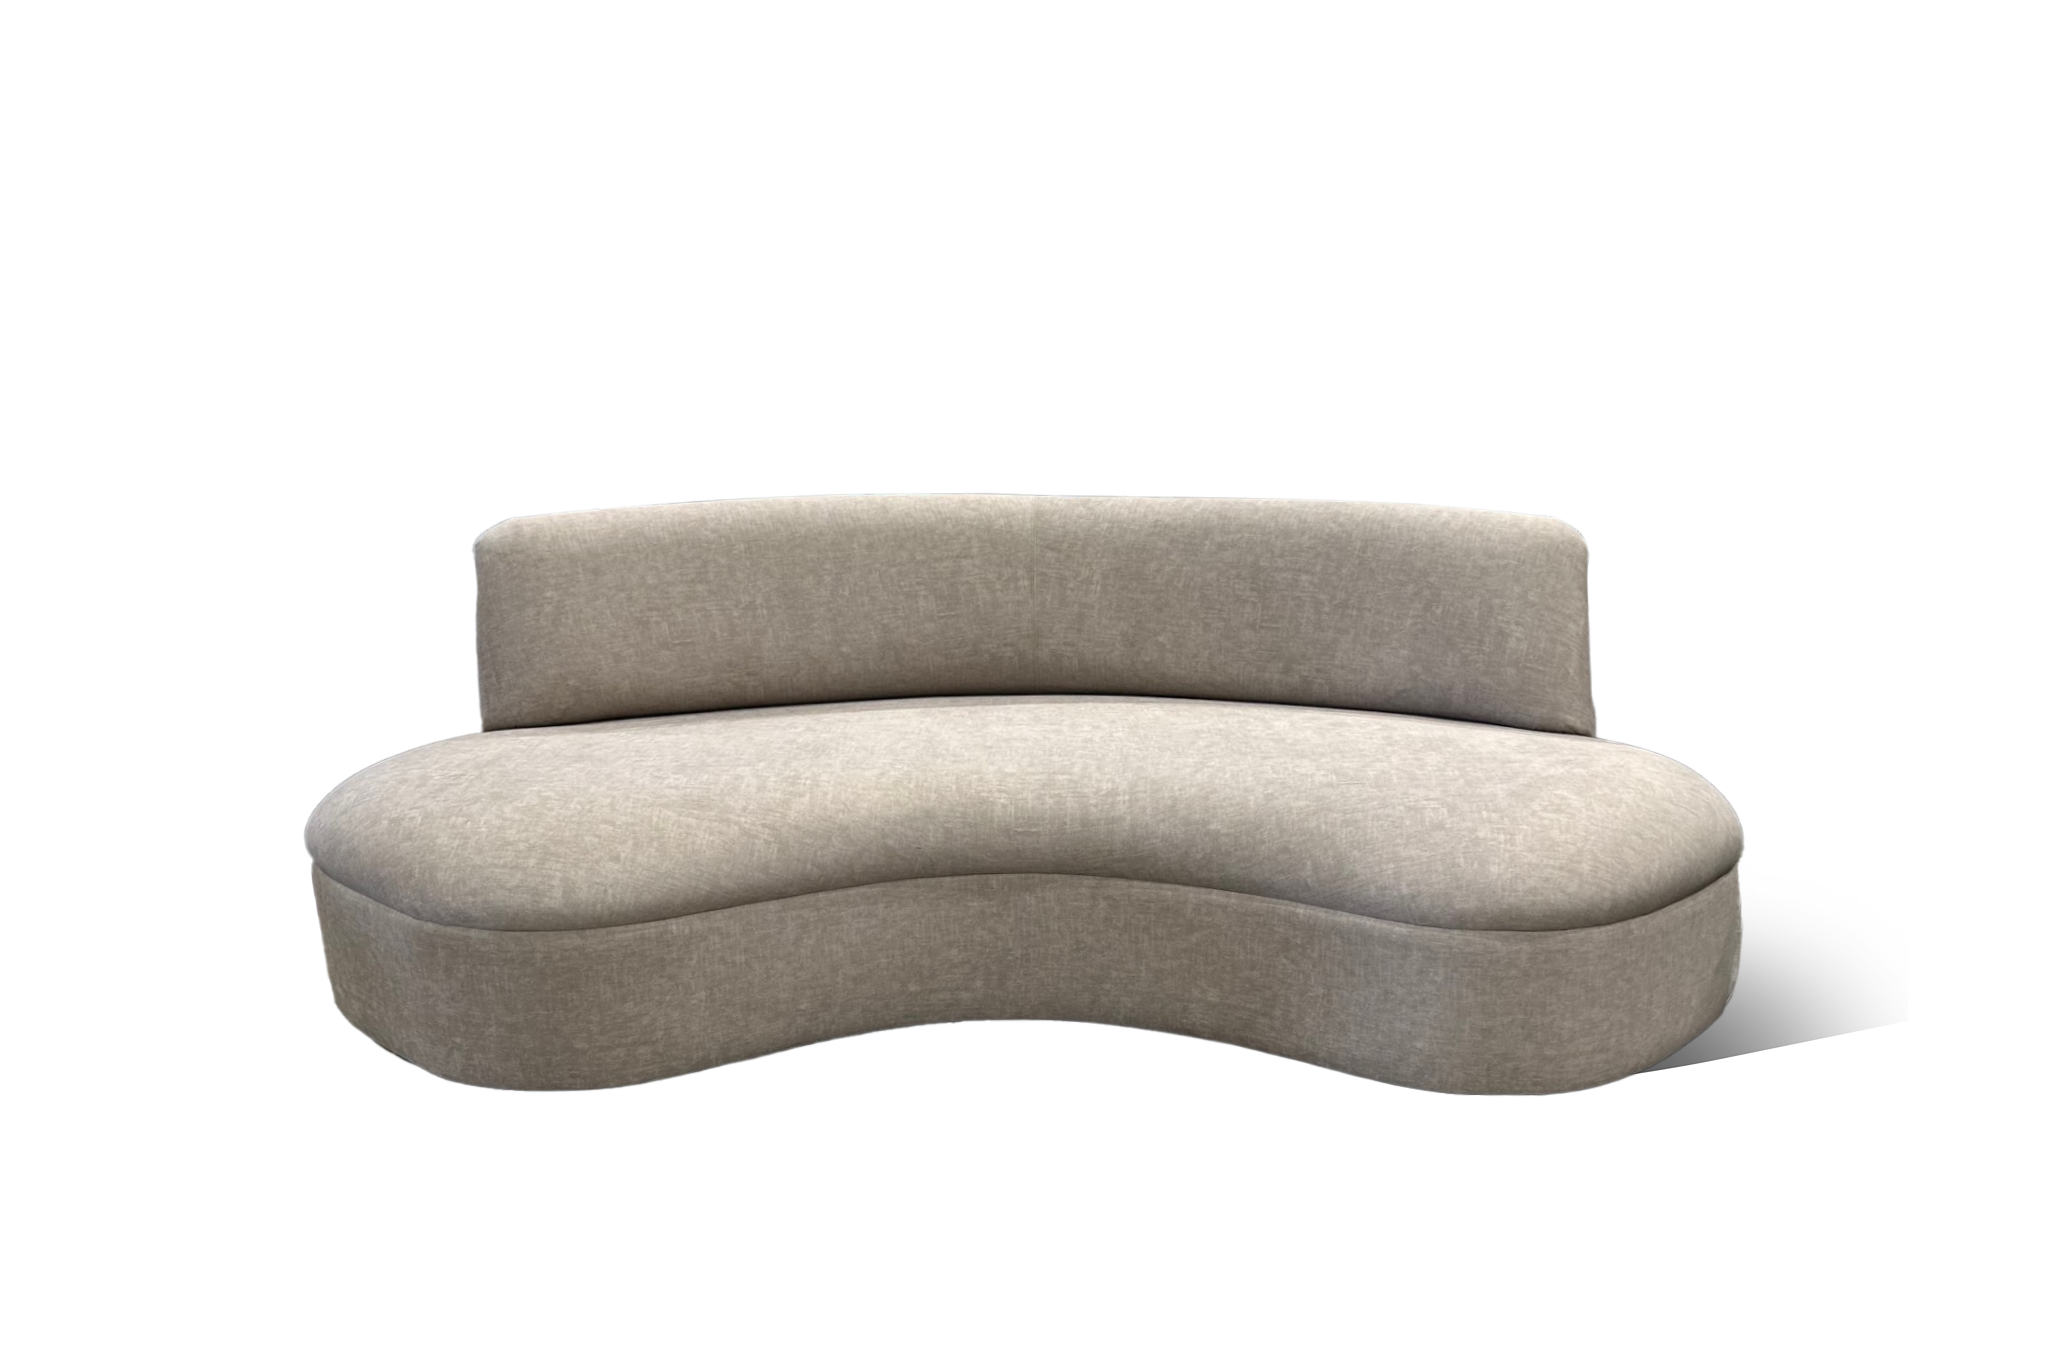 Cloud Organic Sofa - Buckwheat Suede Cloth - Zuster Furniture